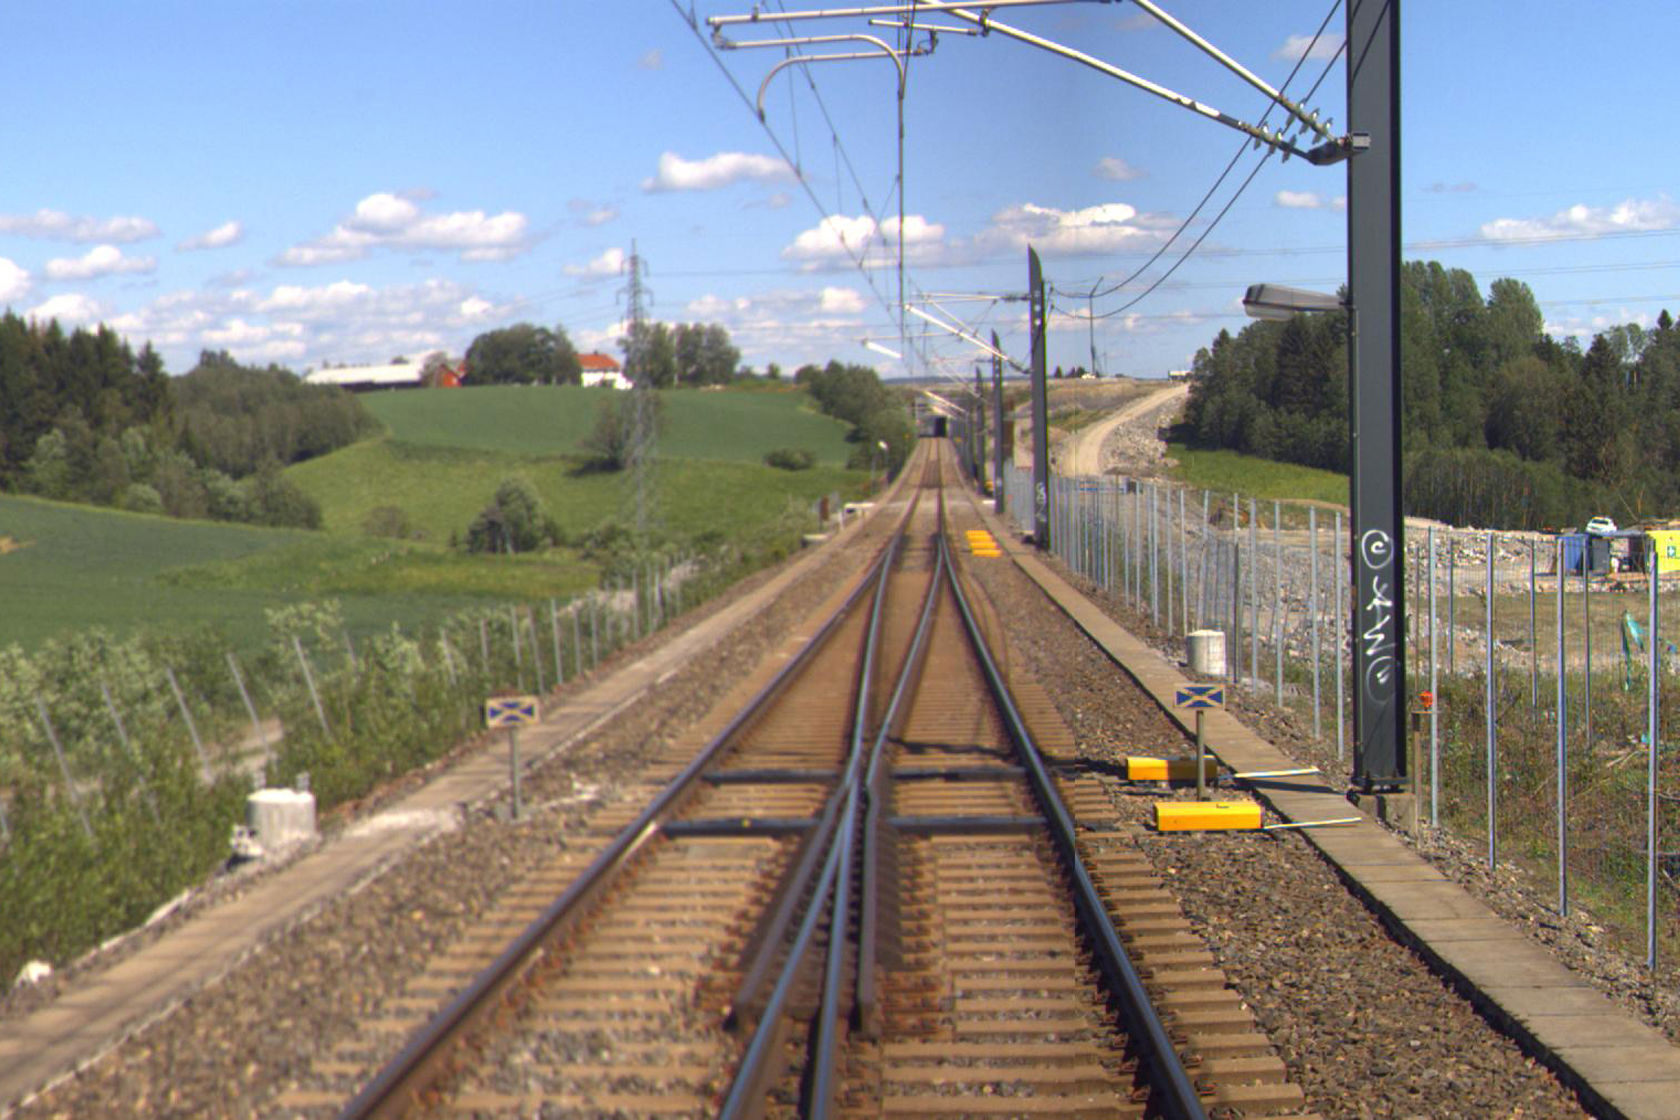 Tracks at Venjar station